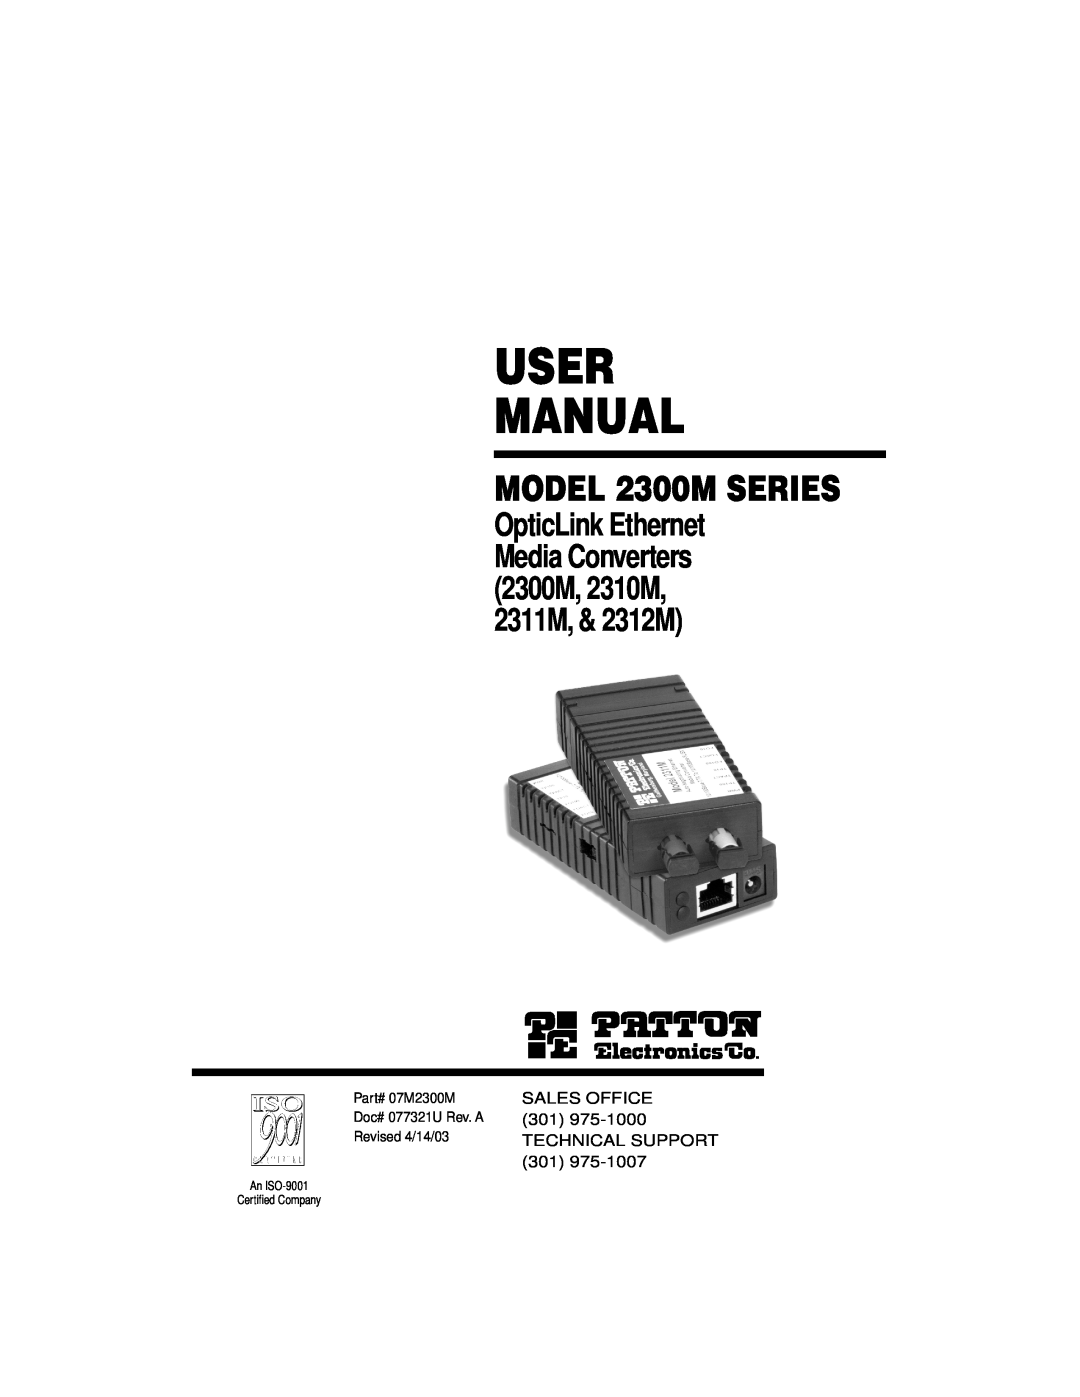 Patton electronic 2310M, 2312M, 2311M user manual User Manual, MODEL 2300M SERIES 